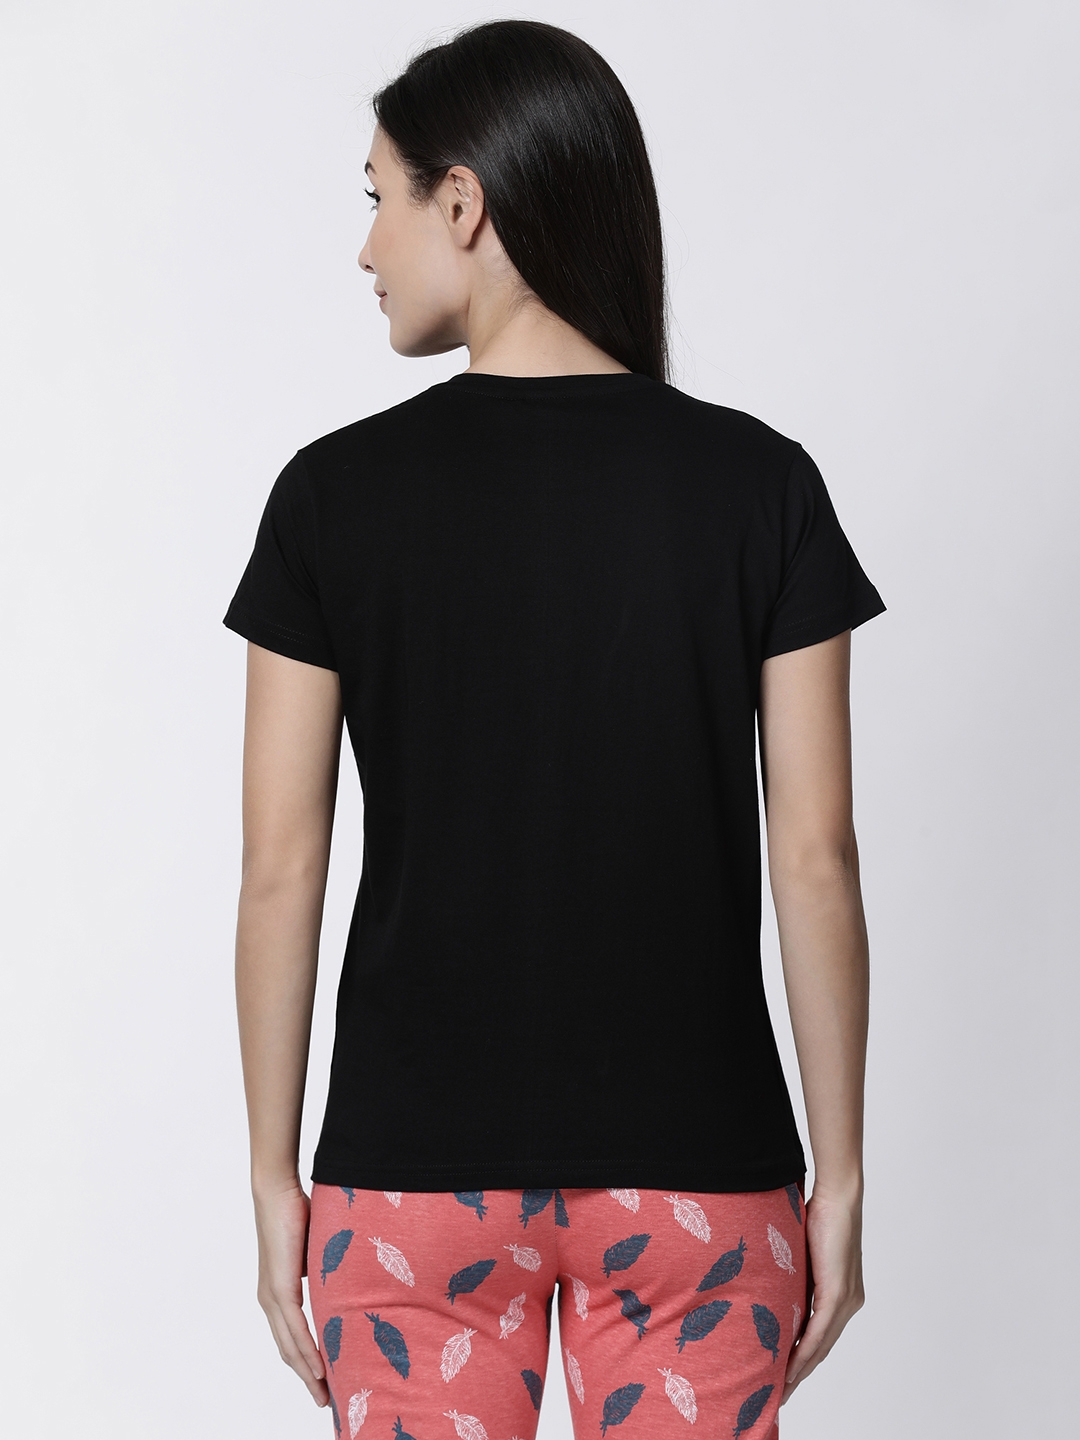 Kryptic | Women's Black Cotton Printed T-Shirts 2